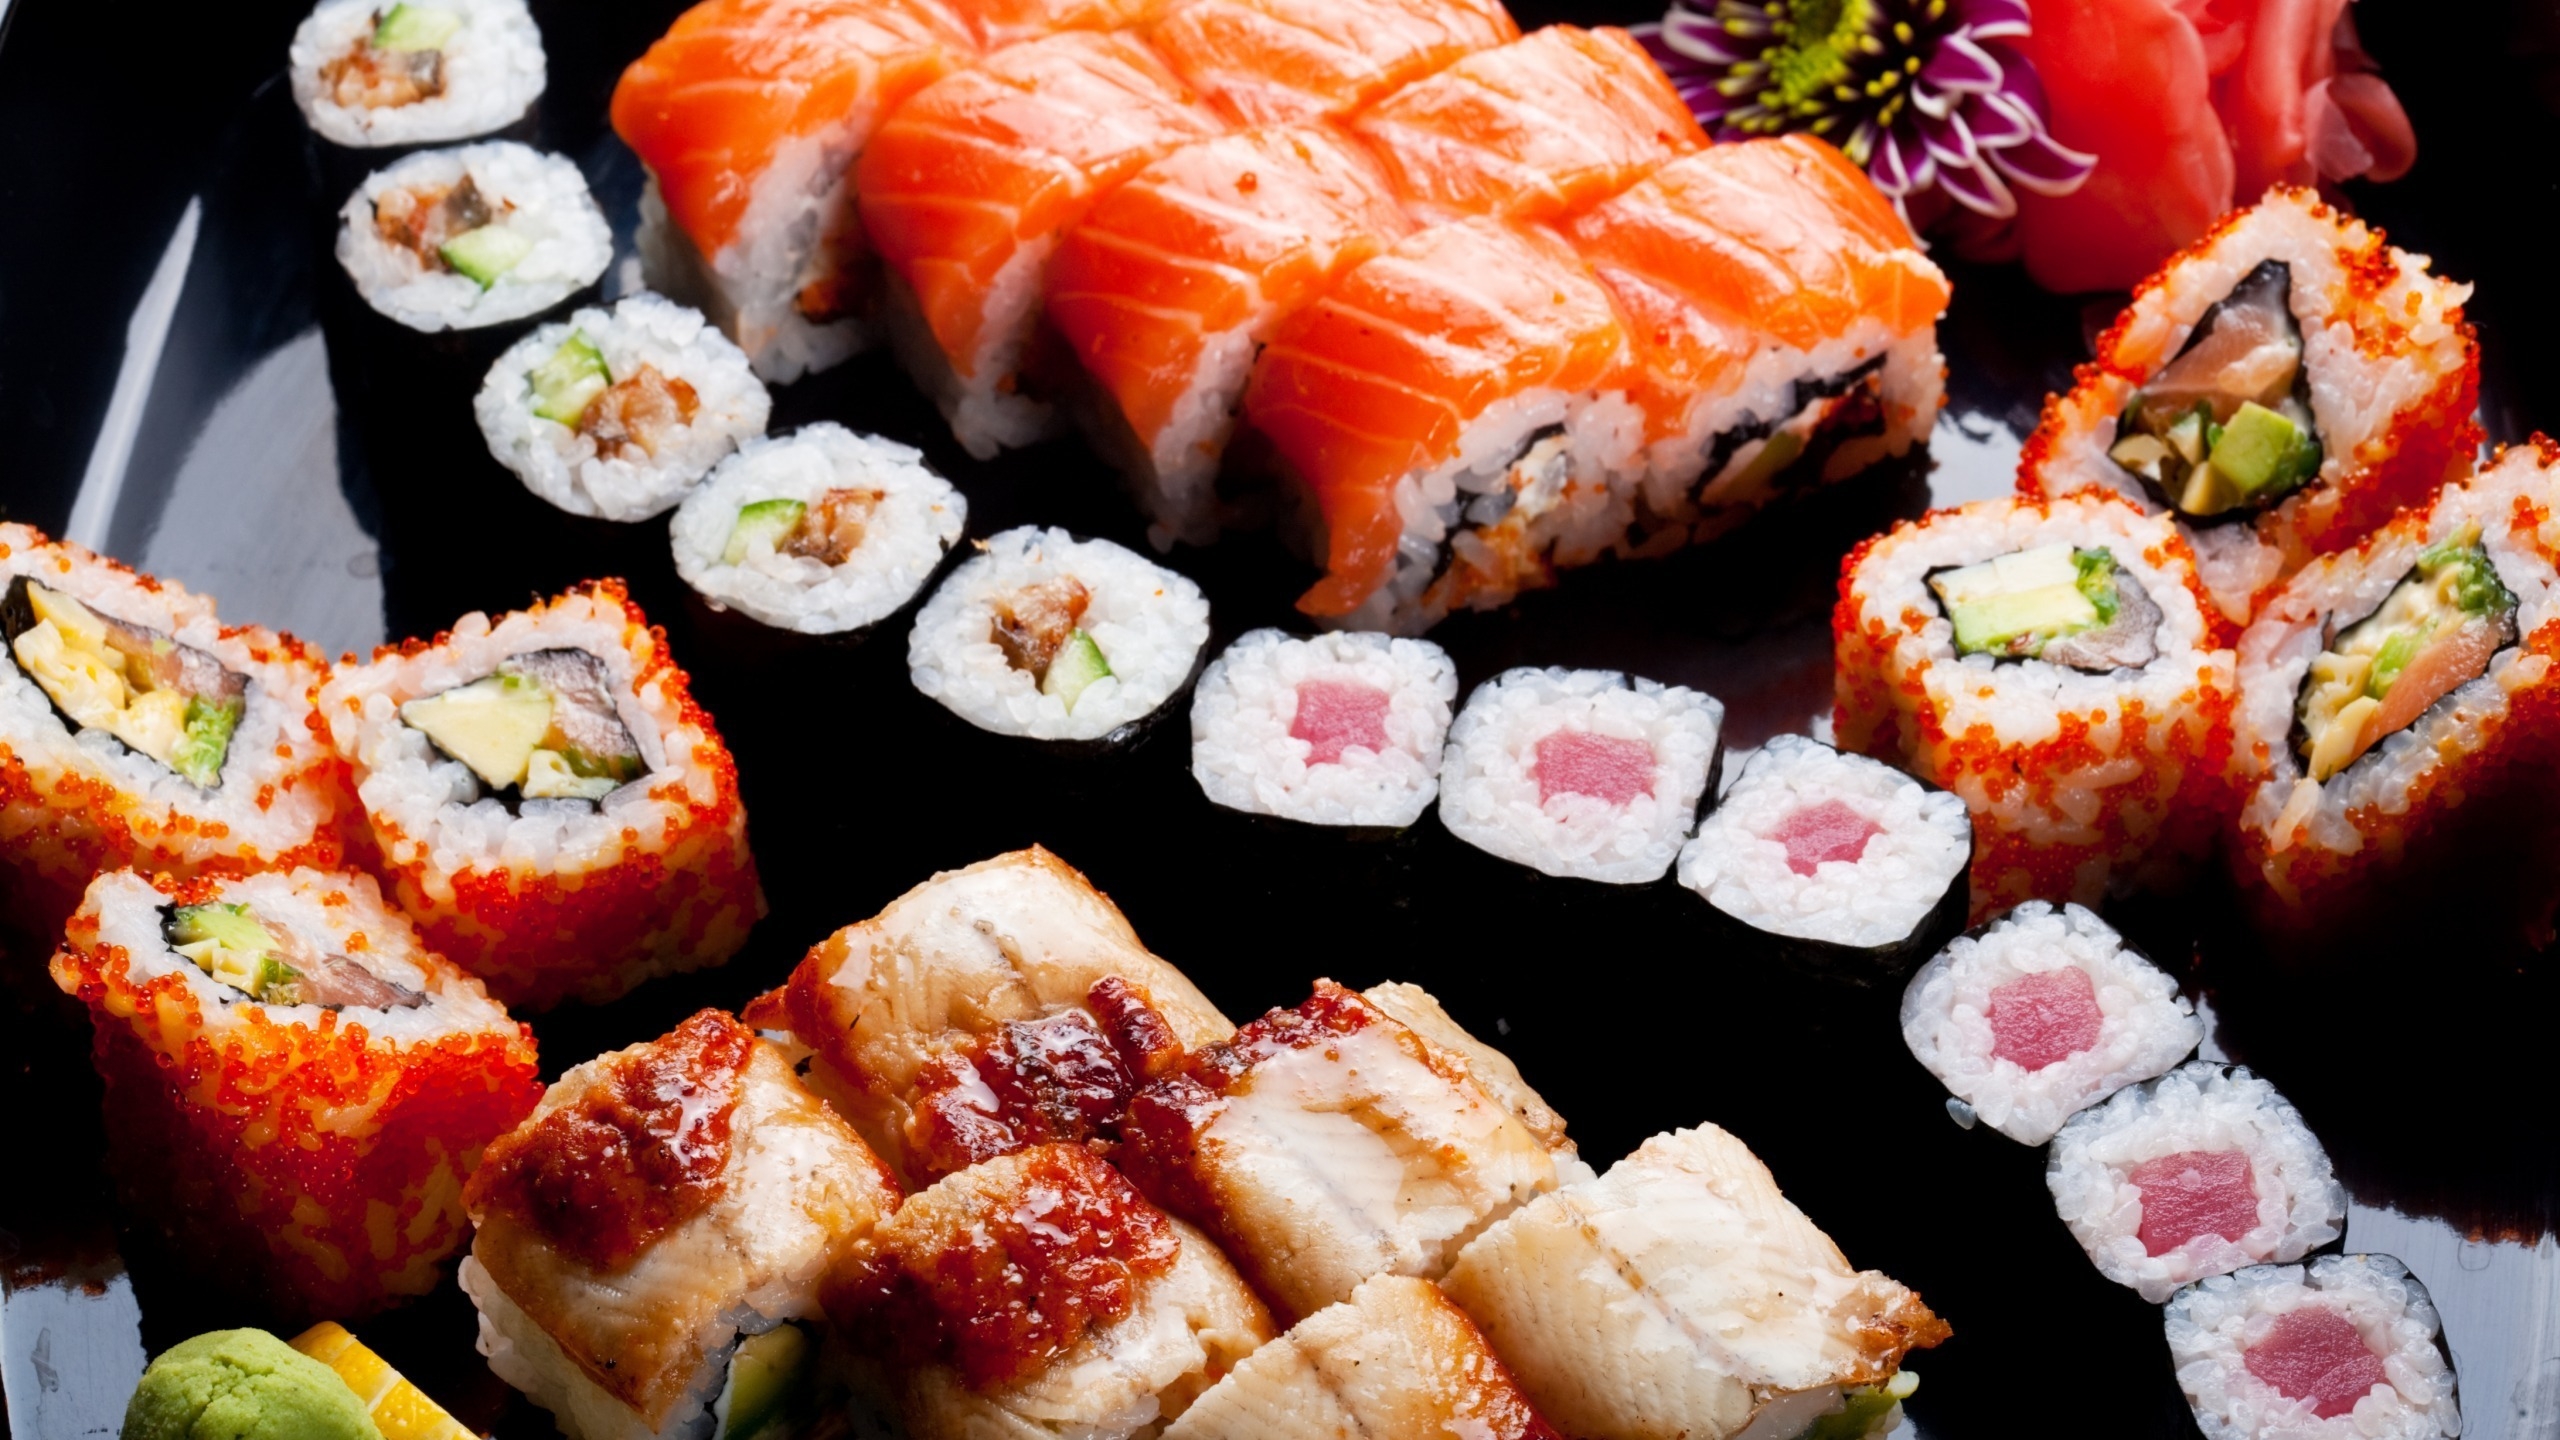 Sushi for 2560x1440 HDTV resolution